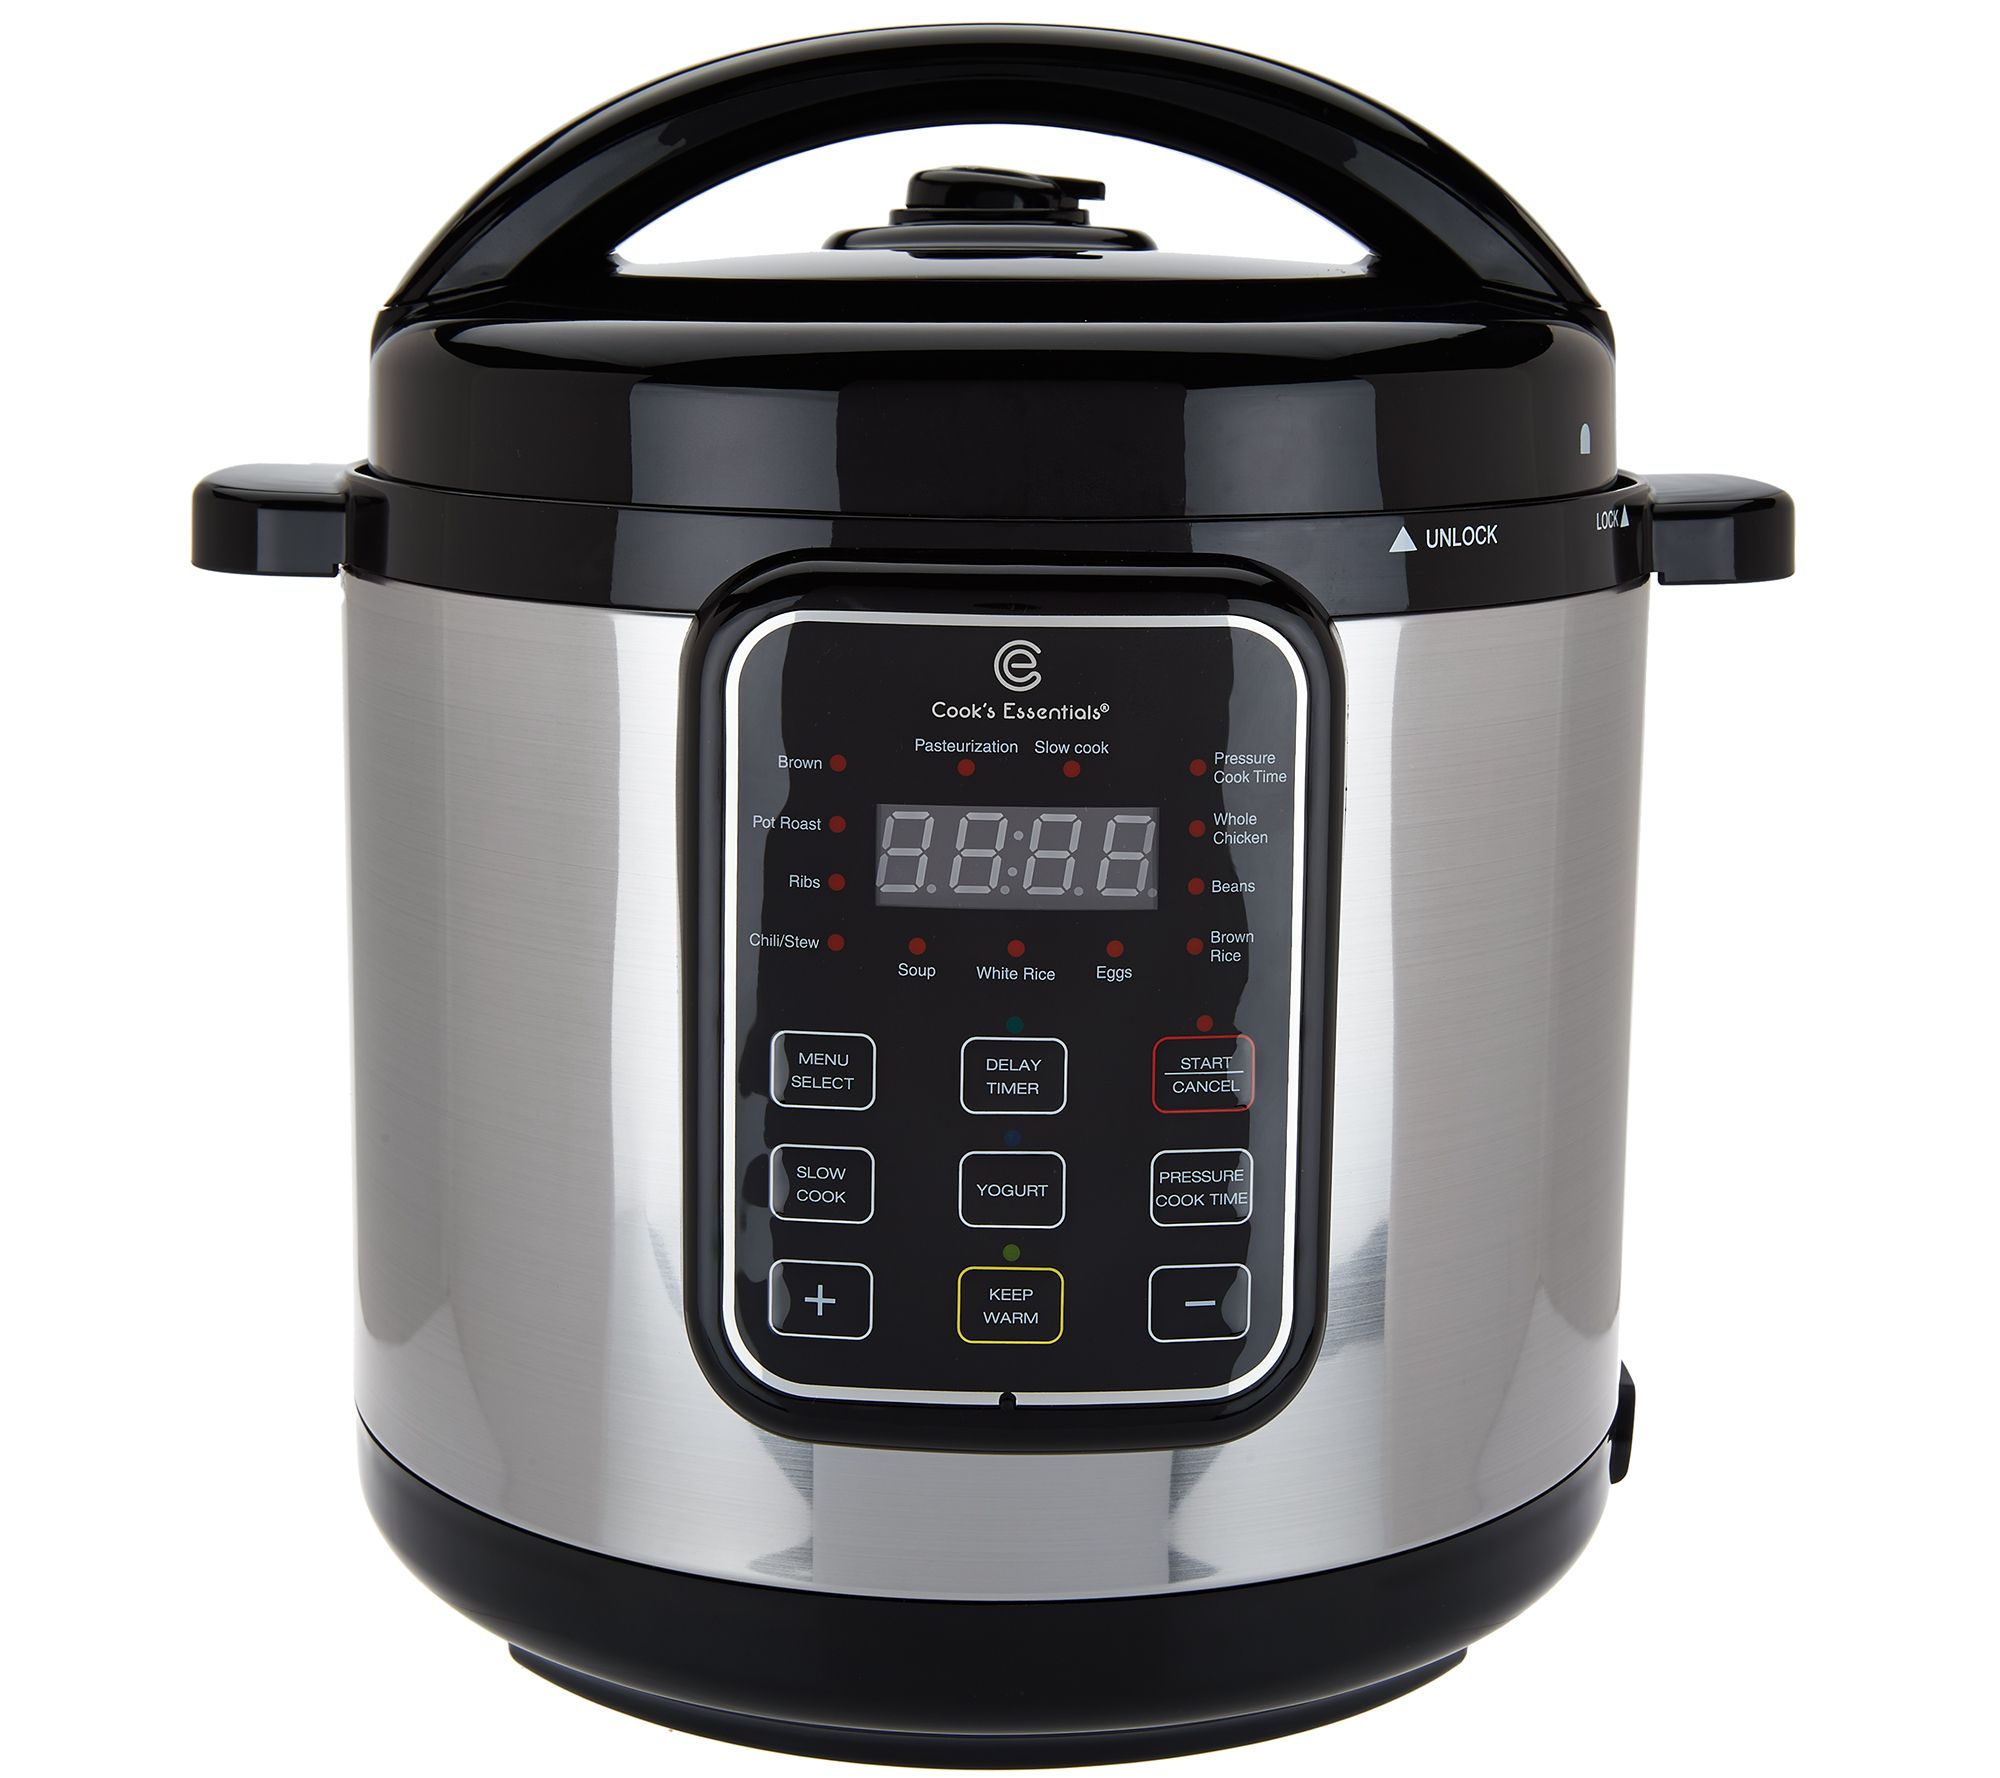 Cooks essentials pressure cooker manual 99725